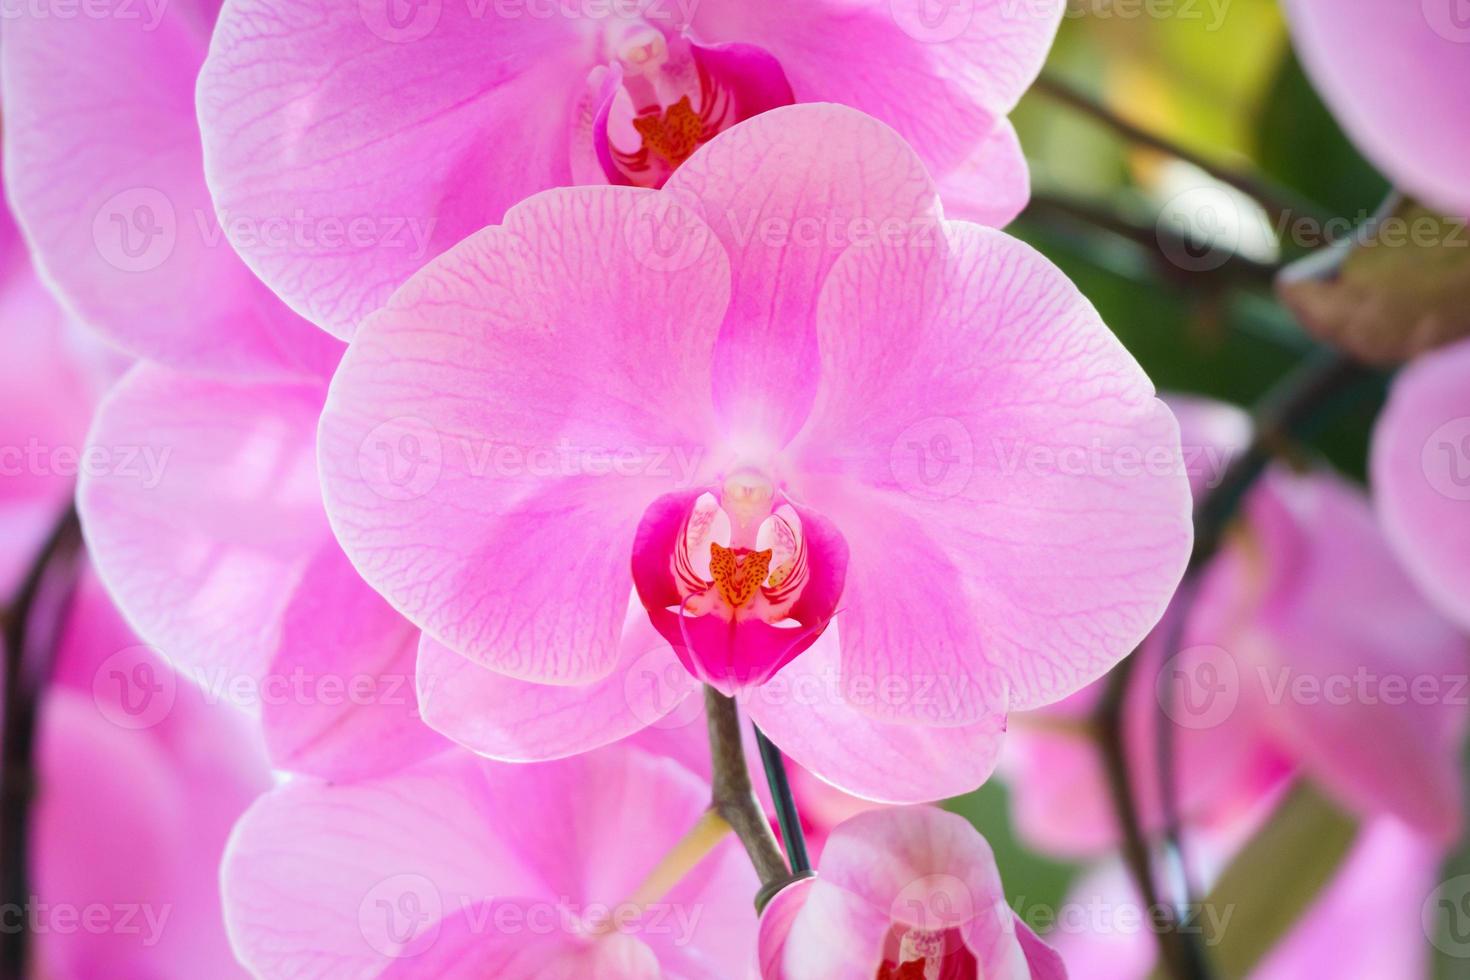 linda flor de orquídea phalaenopsis florescendo no fundo floral do jardim foto